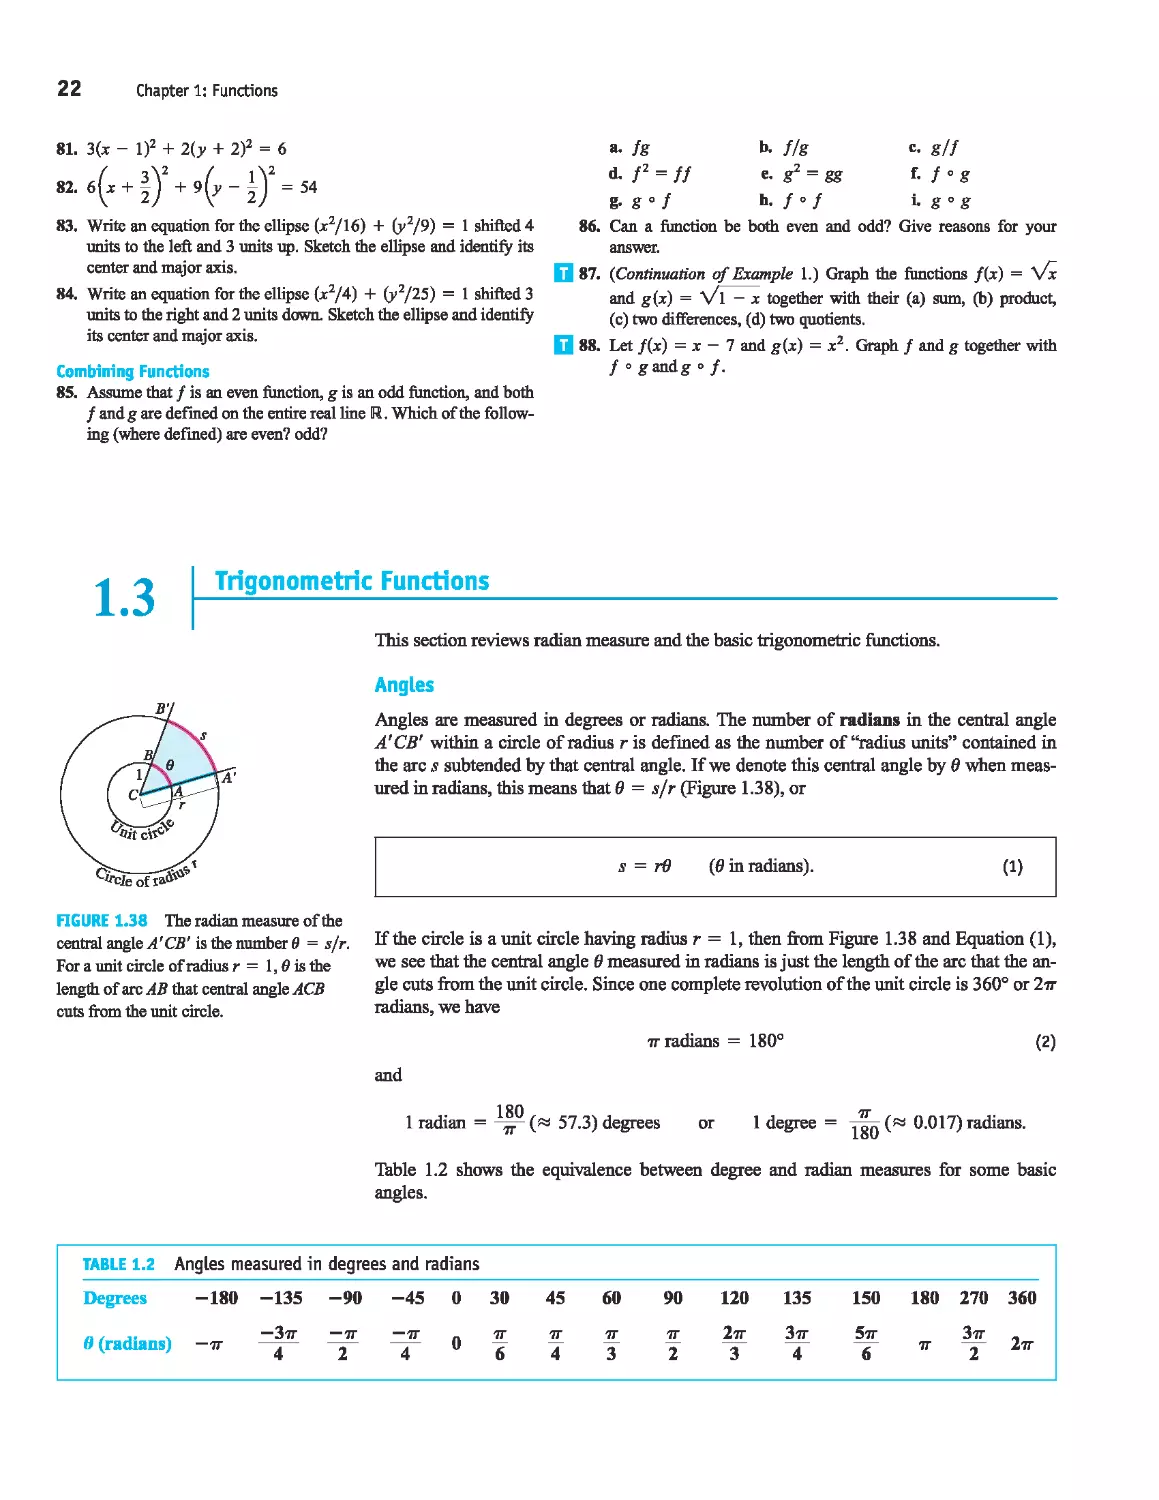 1.3 - Trigonometric Functions